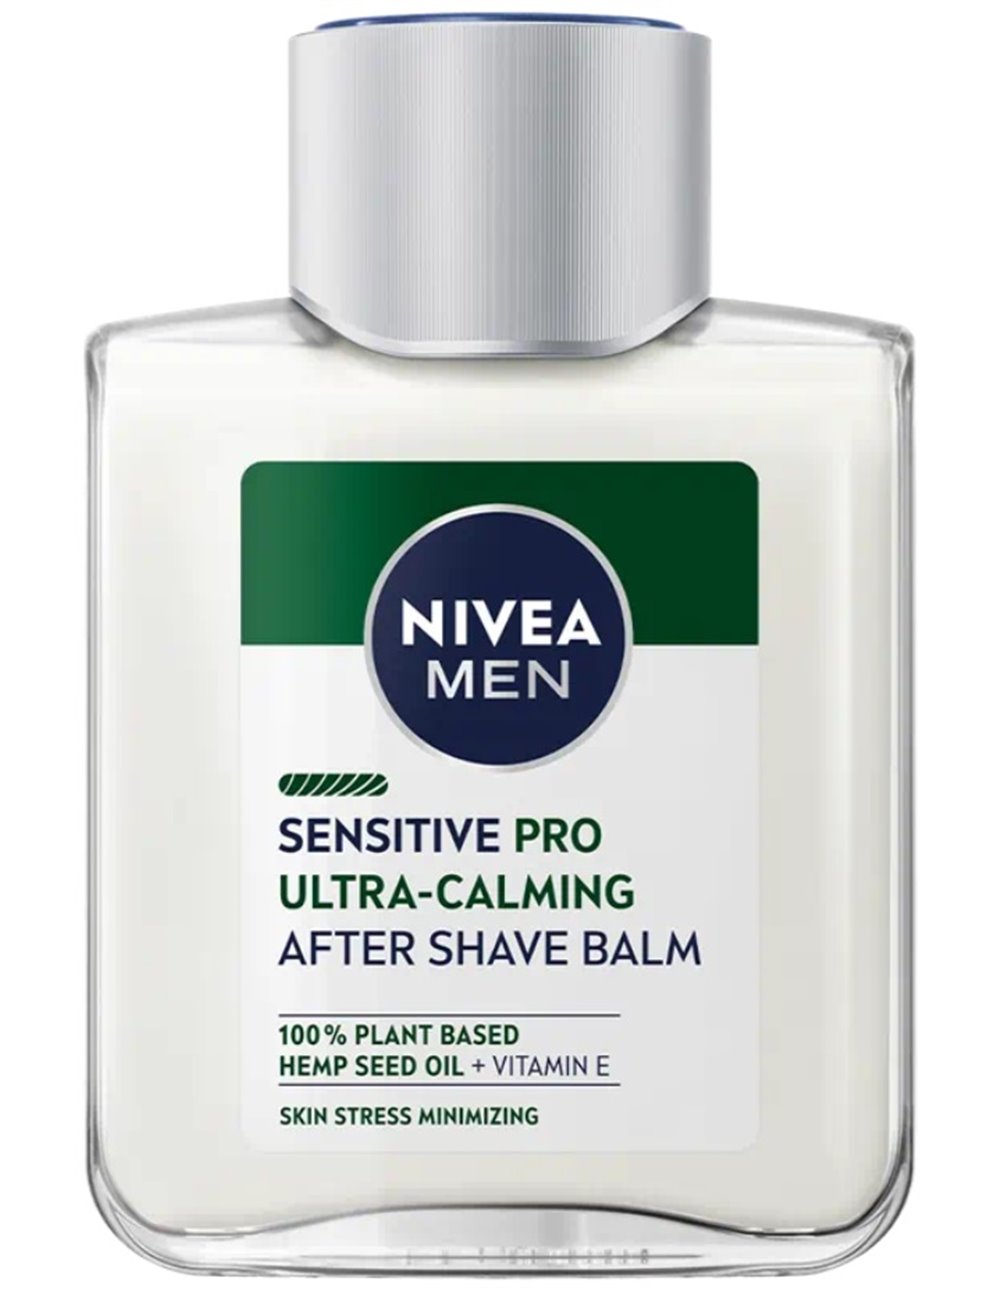 Nivea Balsam po Goleniu dla Mężczyzn Sensitive Pro Ultra - Calming 100 ml